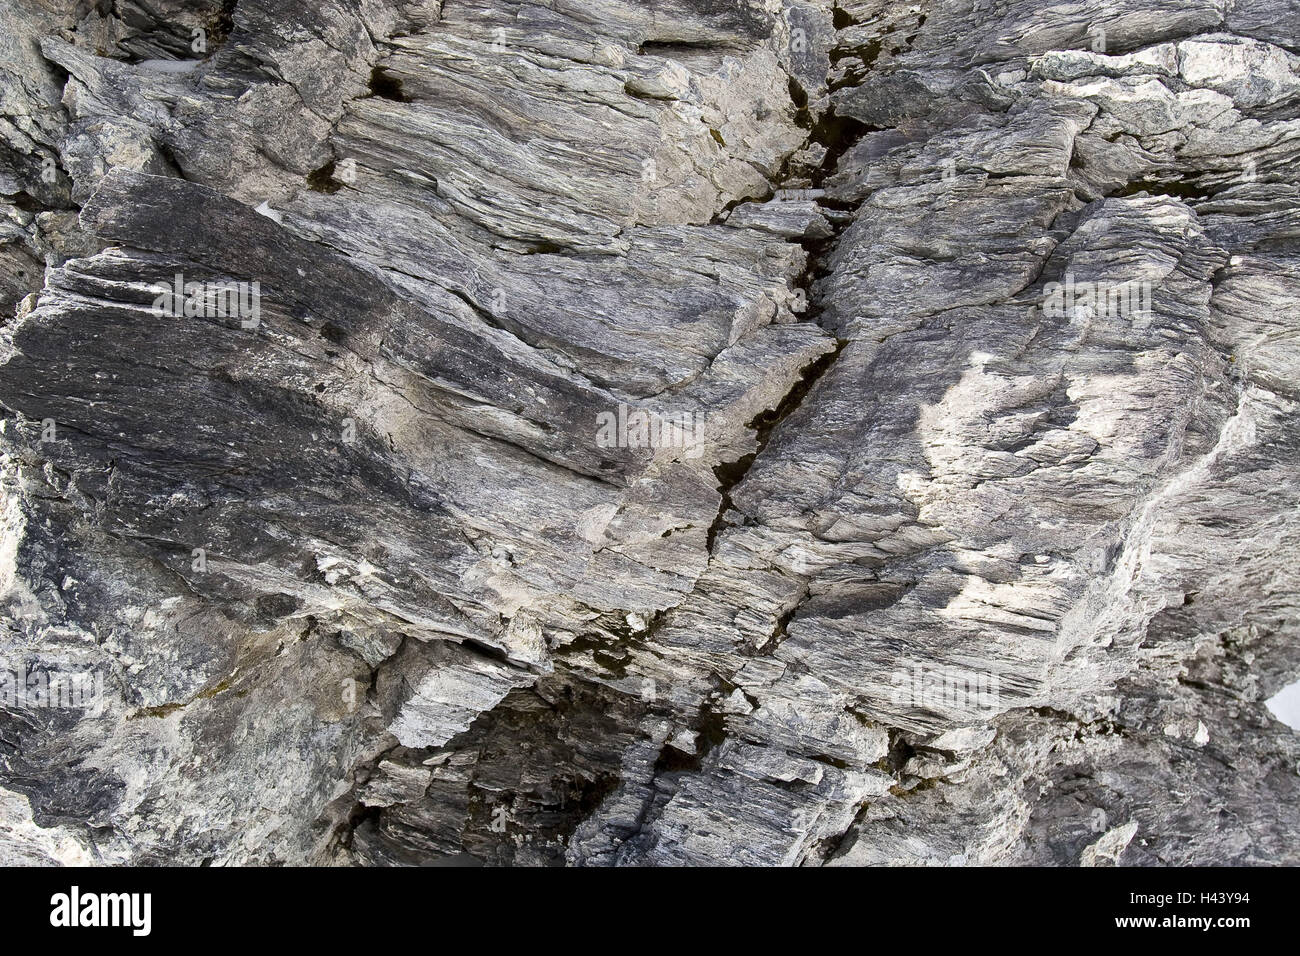 Switzerland, canton Glaris, Glarner alps, rocks, medium close-up, Elm, Glaris, bile formation, rock, primary rocks, grey, graphics, sample, crack, weather-beaten, stony, Stock Photo